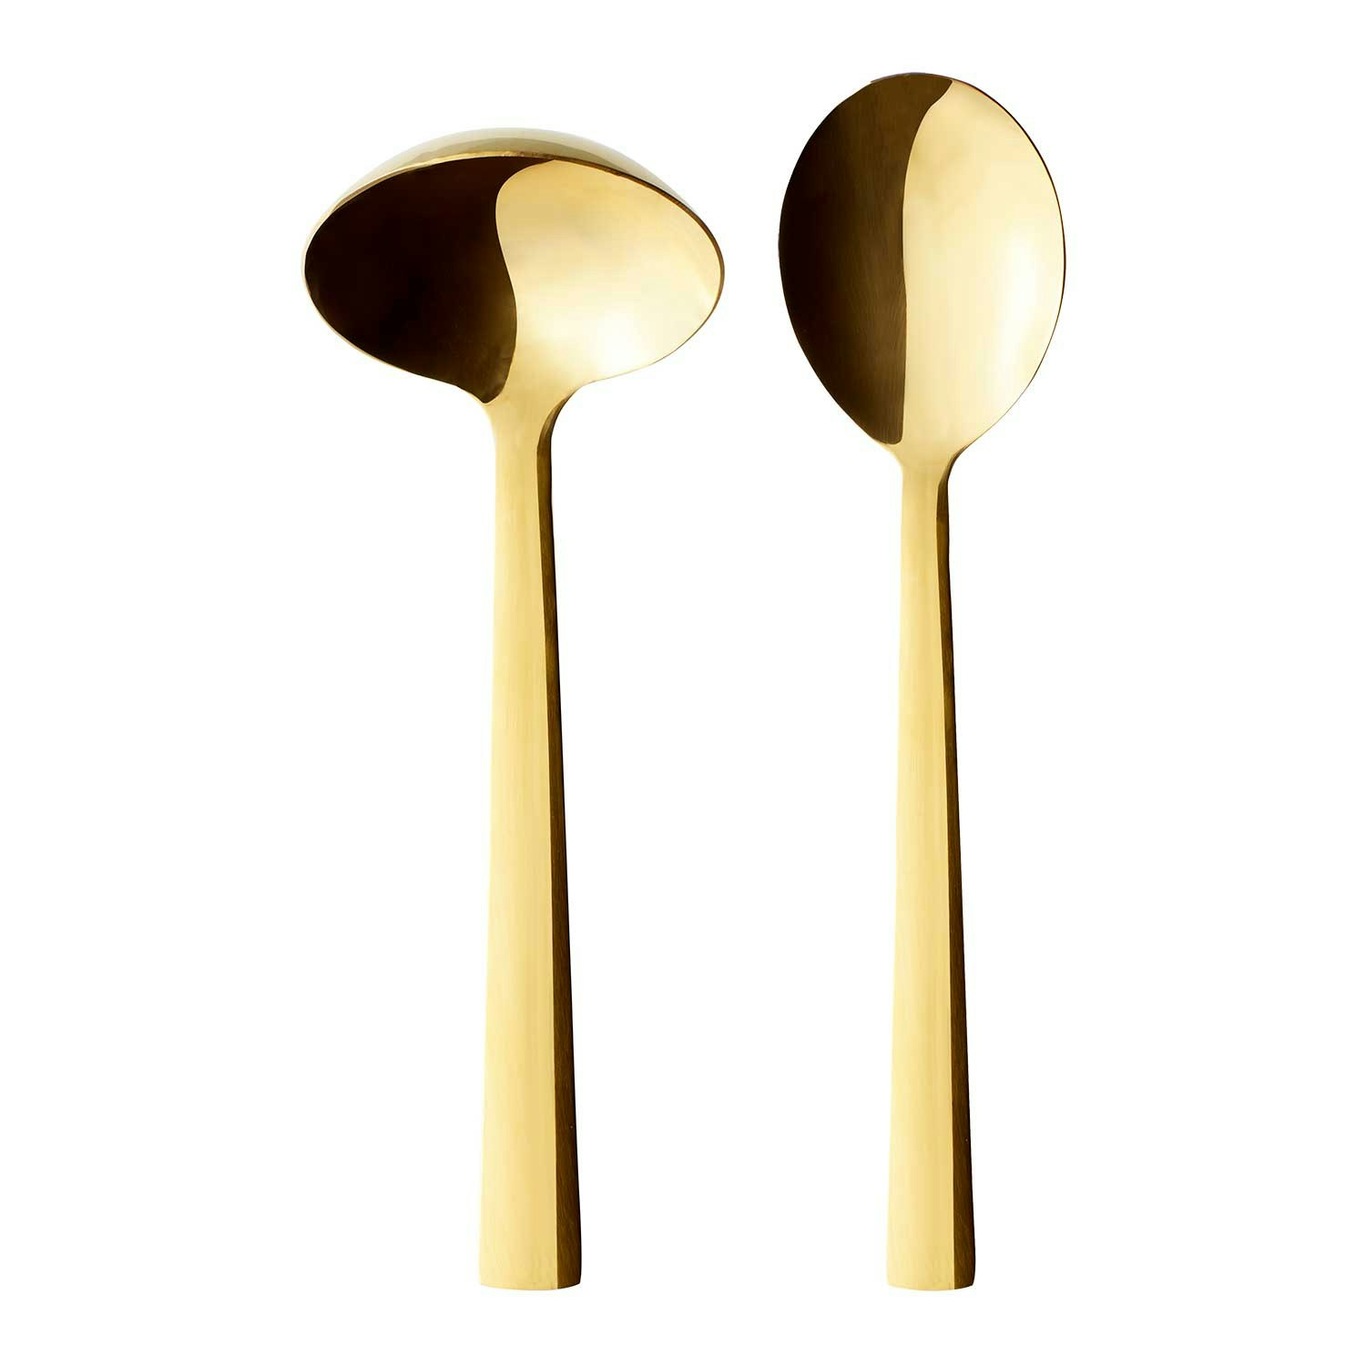 https://royaldesign.com/image/2/aida-raw-sauce-ladle-serving-spoon-1?w=800&quality=80